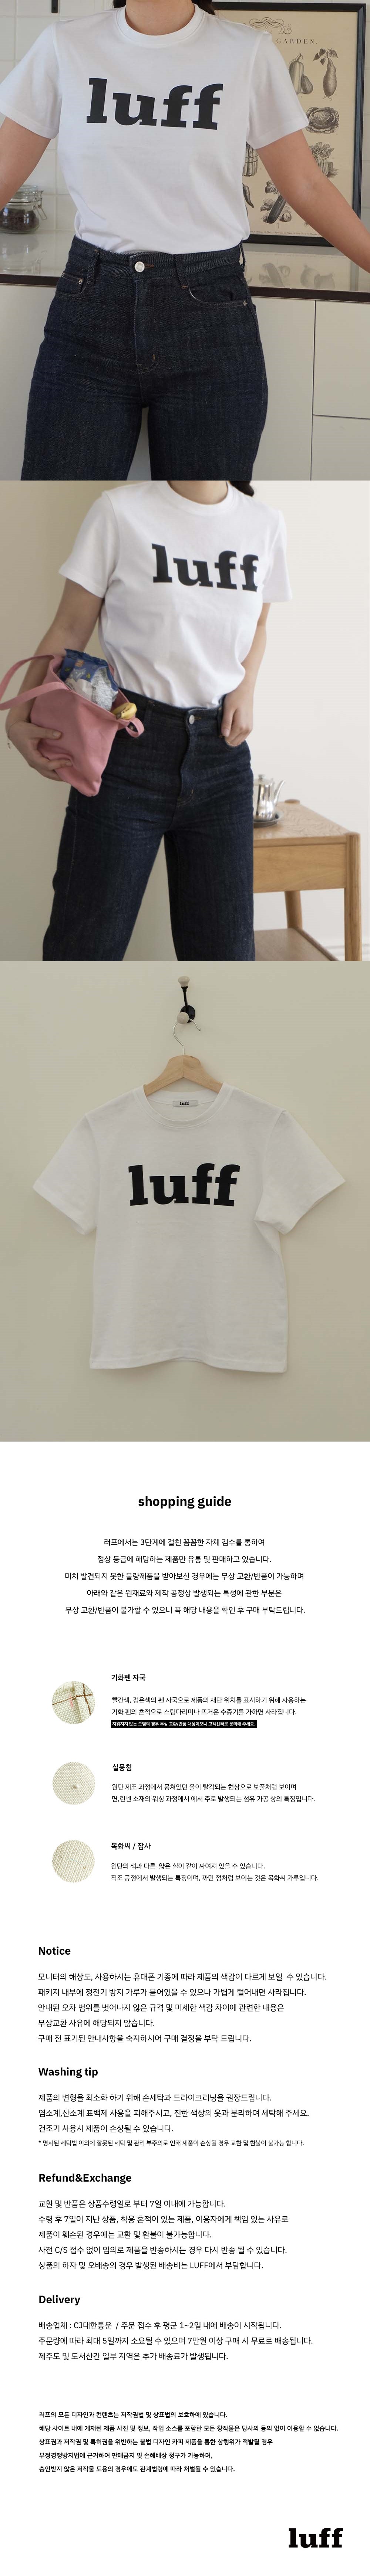 luff logo t-shirt - white